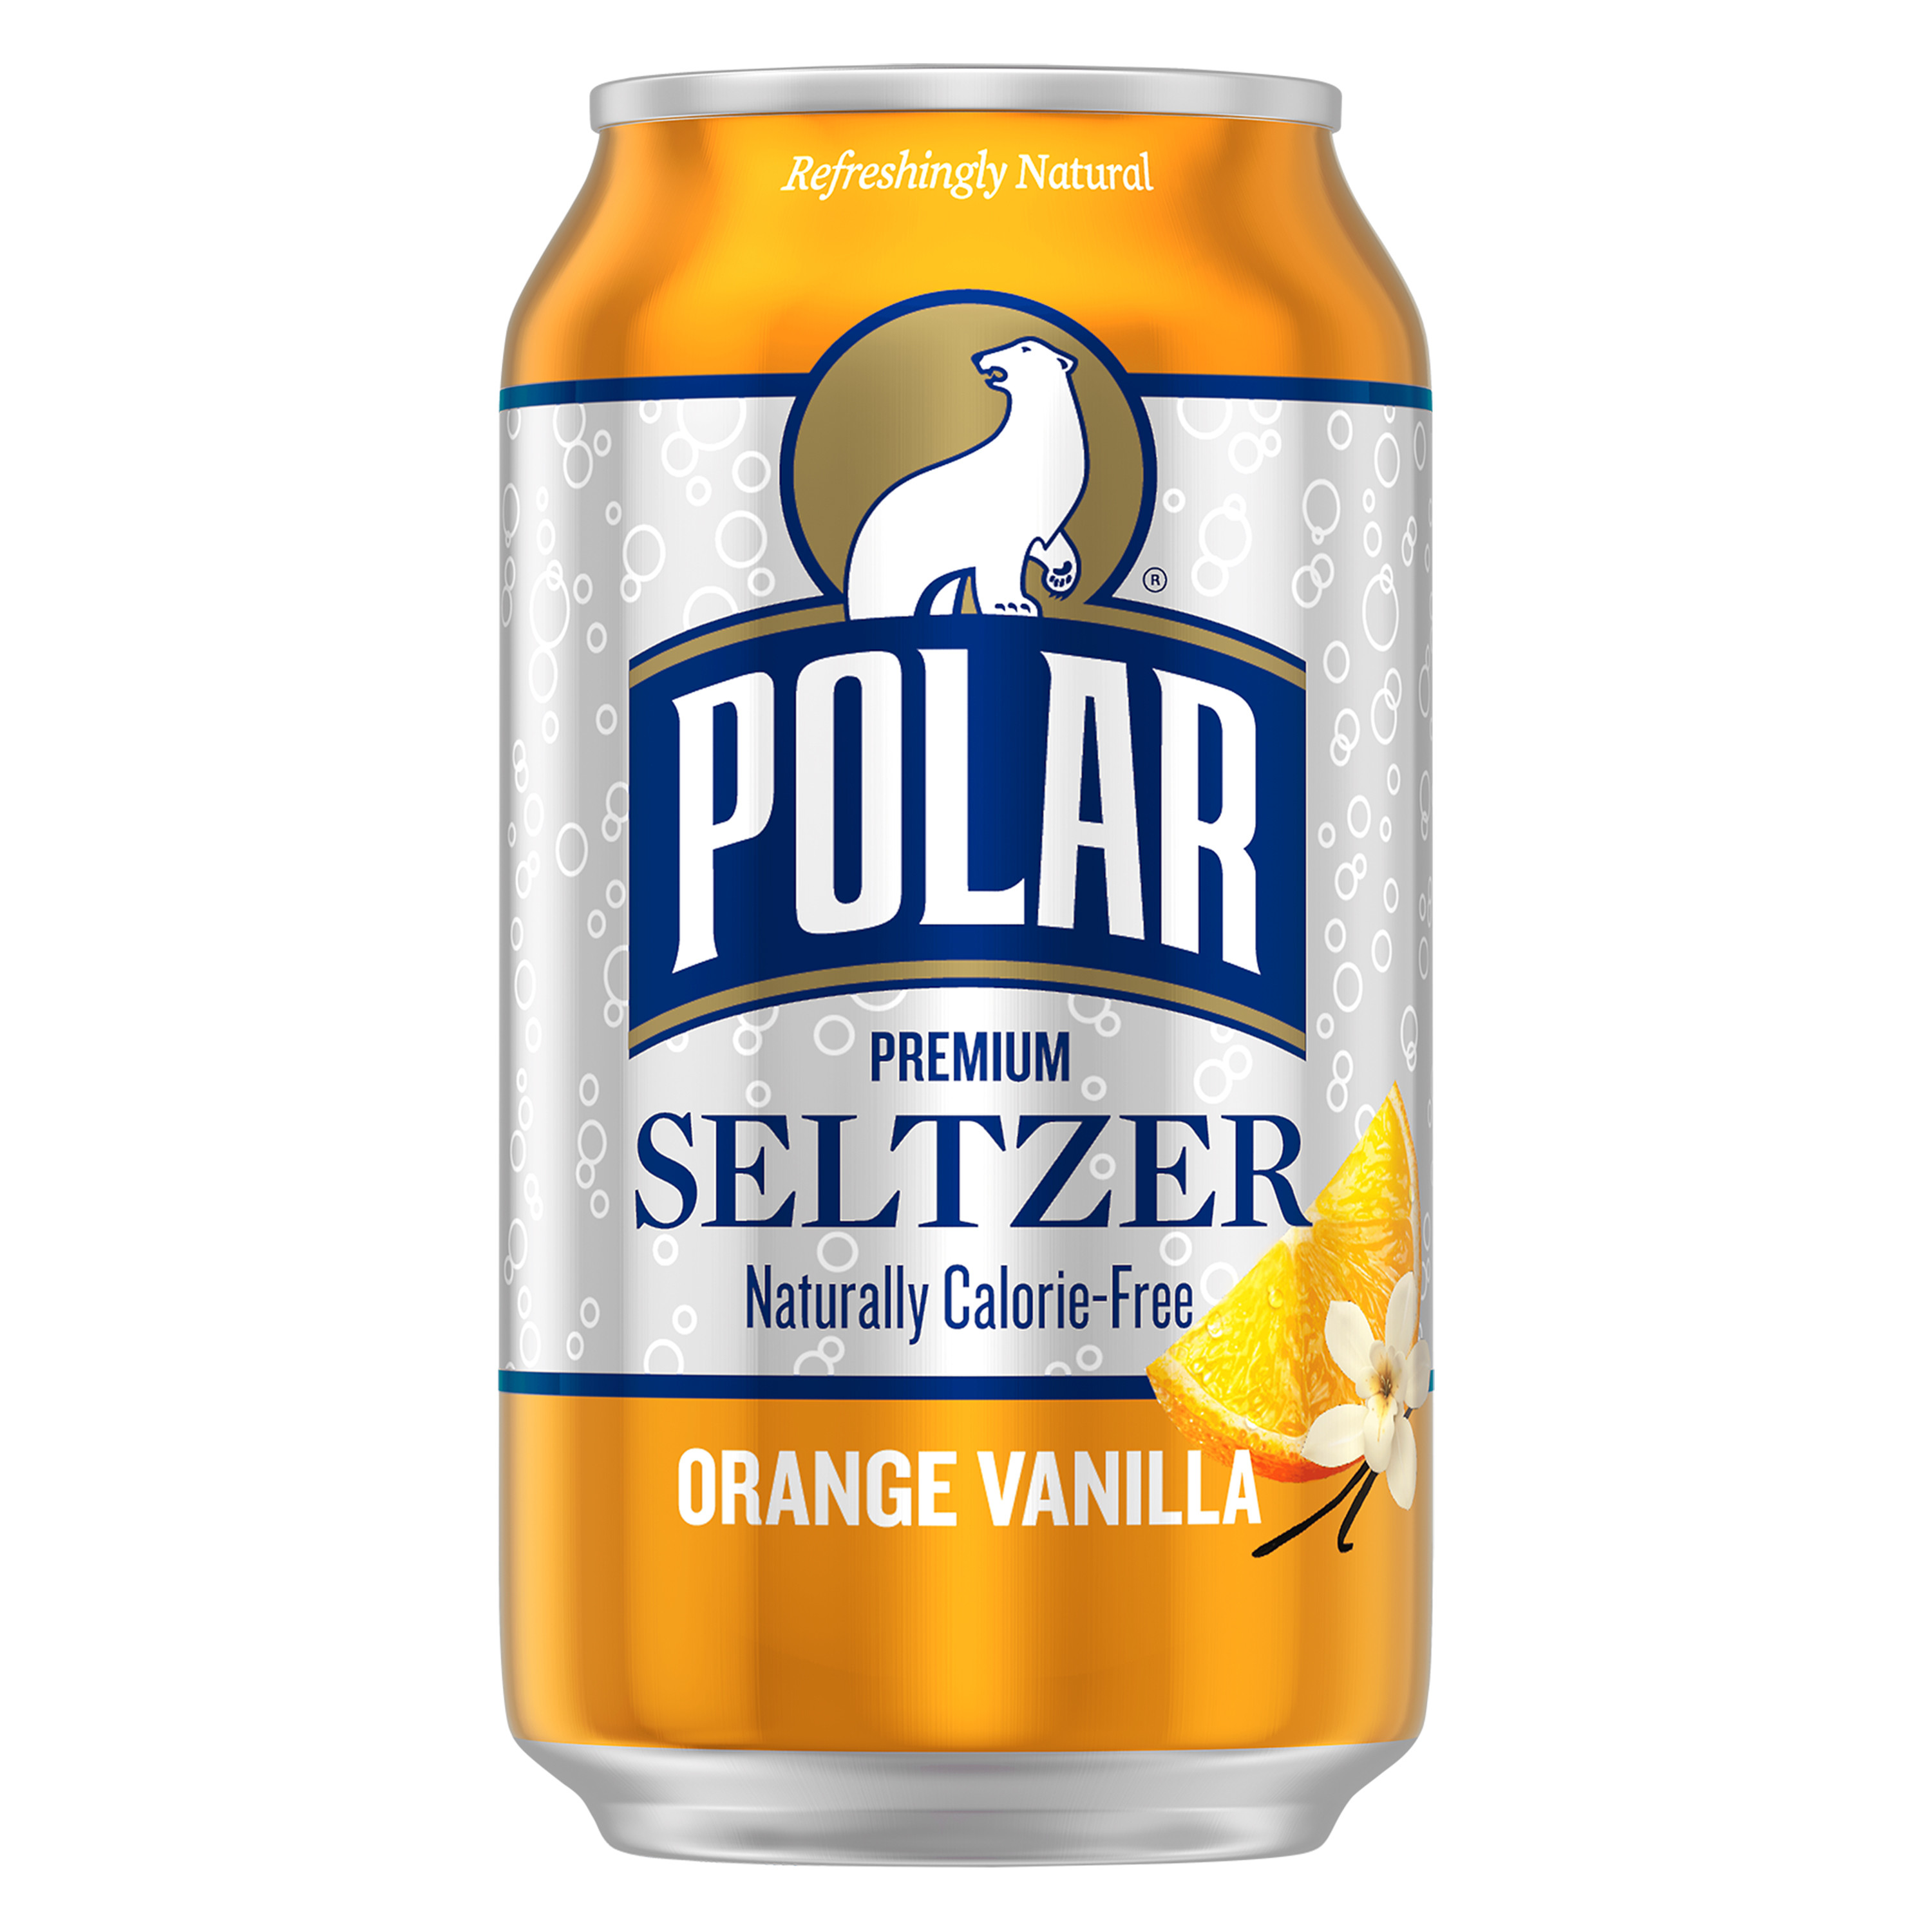 Polar Orange Vanilla Sparkling Seltzer Water, 12 fl oz, 8 pack cans - image 3 of 7